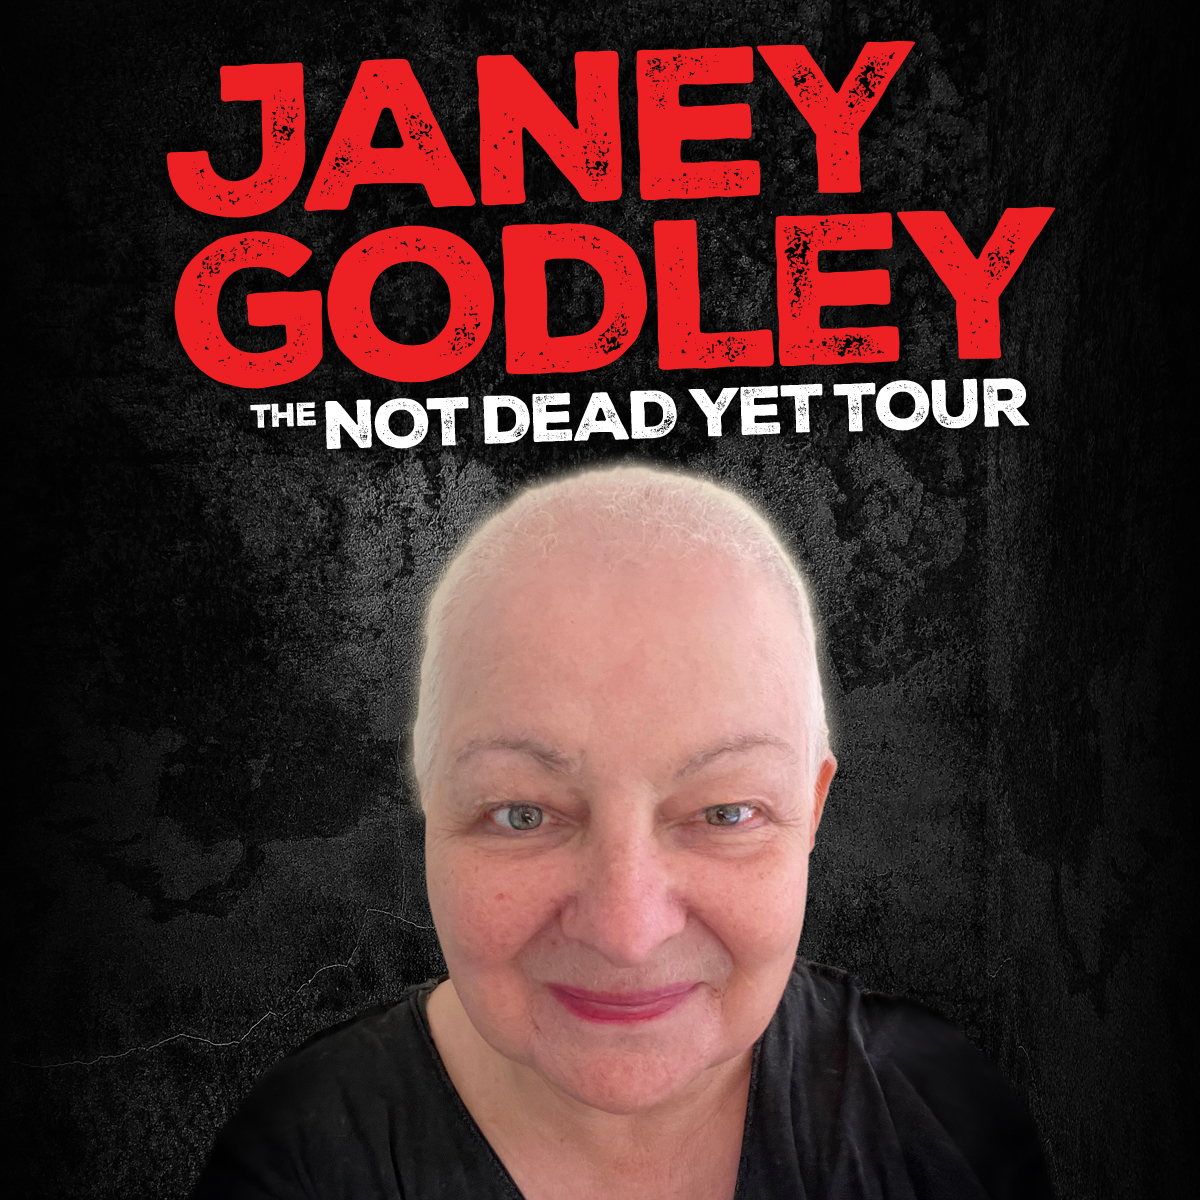 janey godley tour motherwell